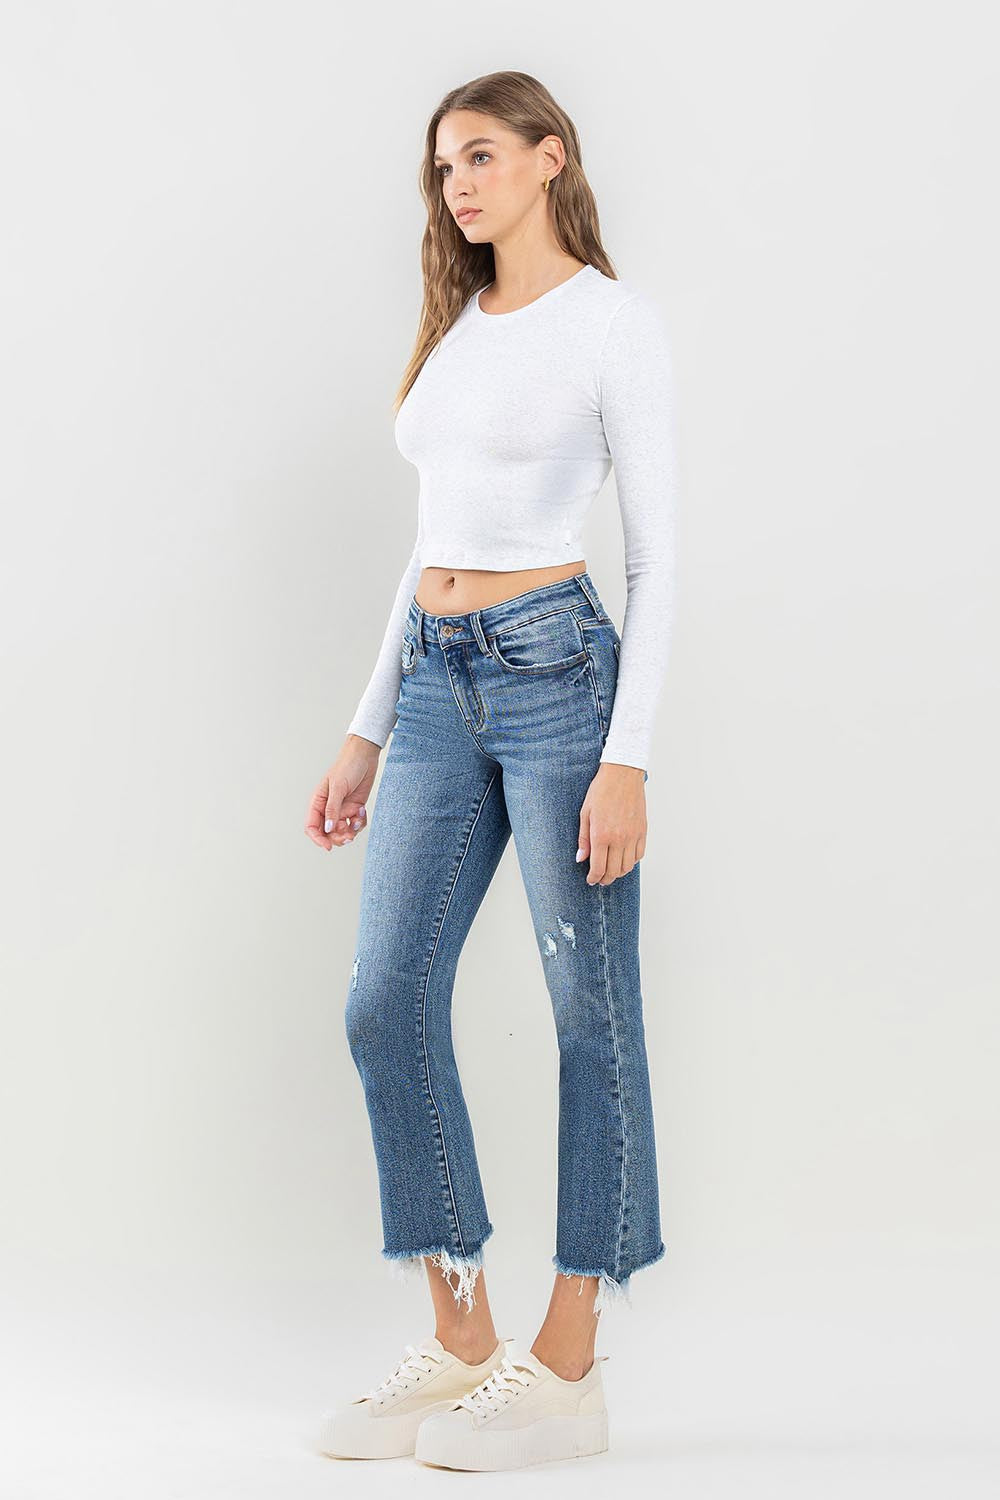 Clara - Mid Rise Frayed Hem Jeans - Lovervet - Exclusively Online